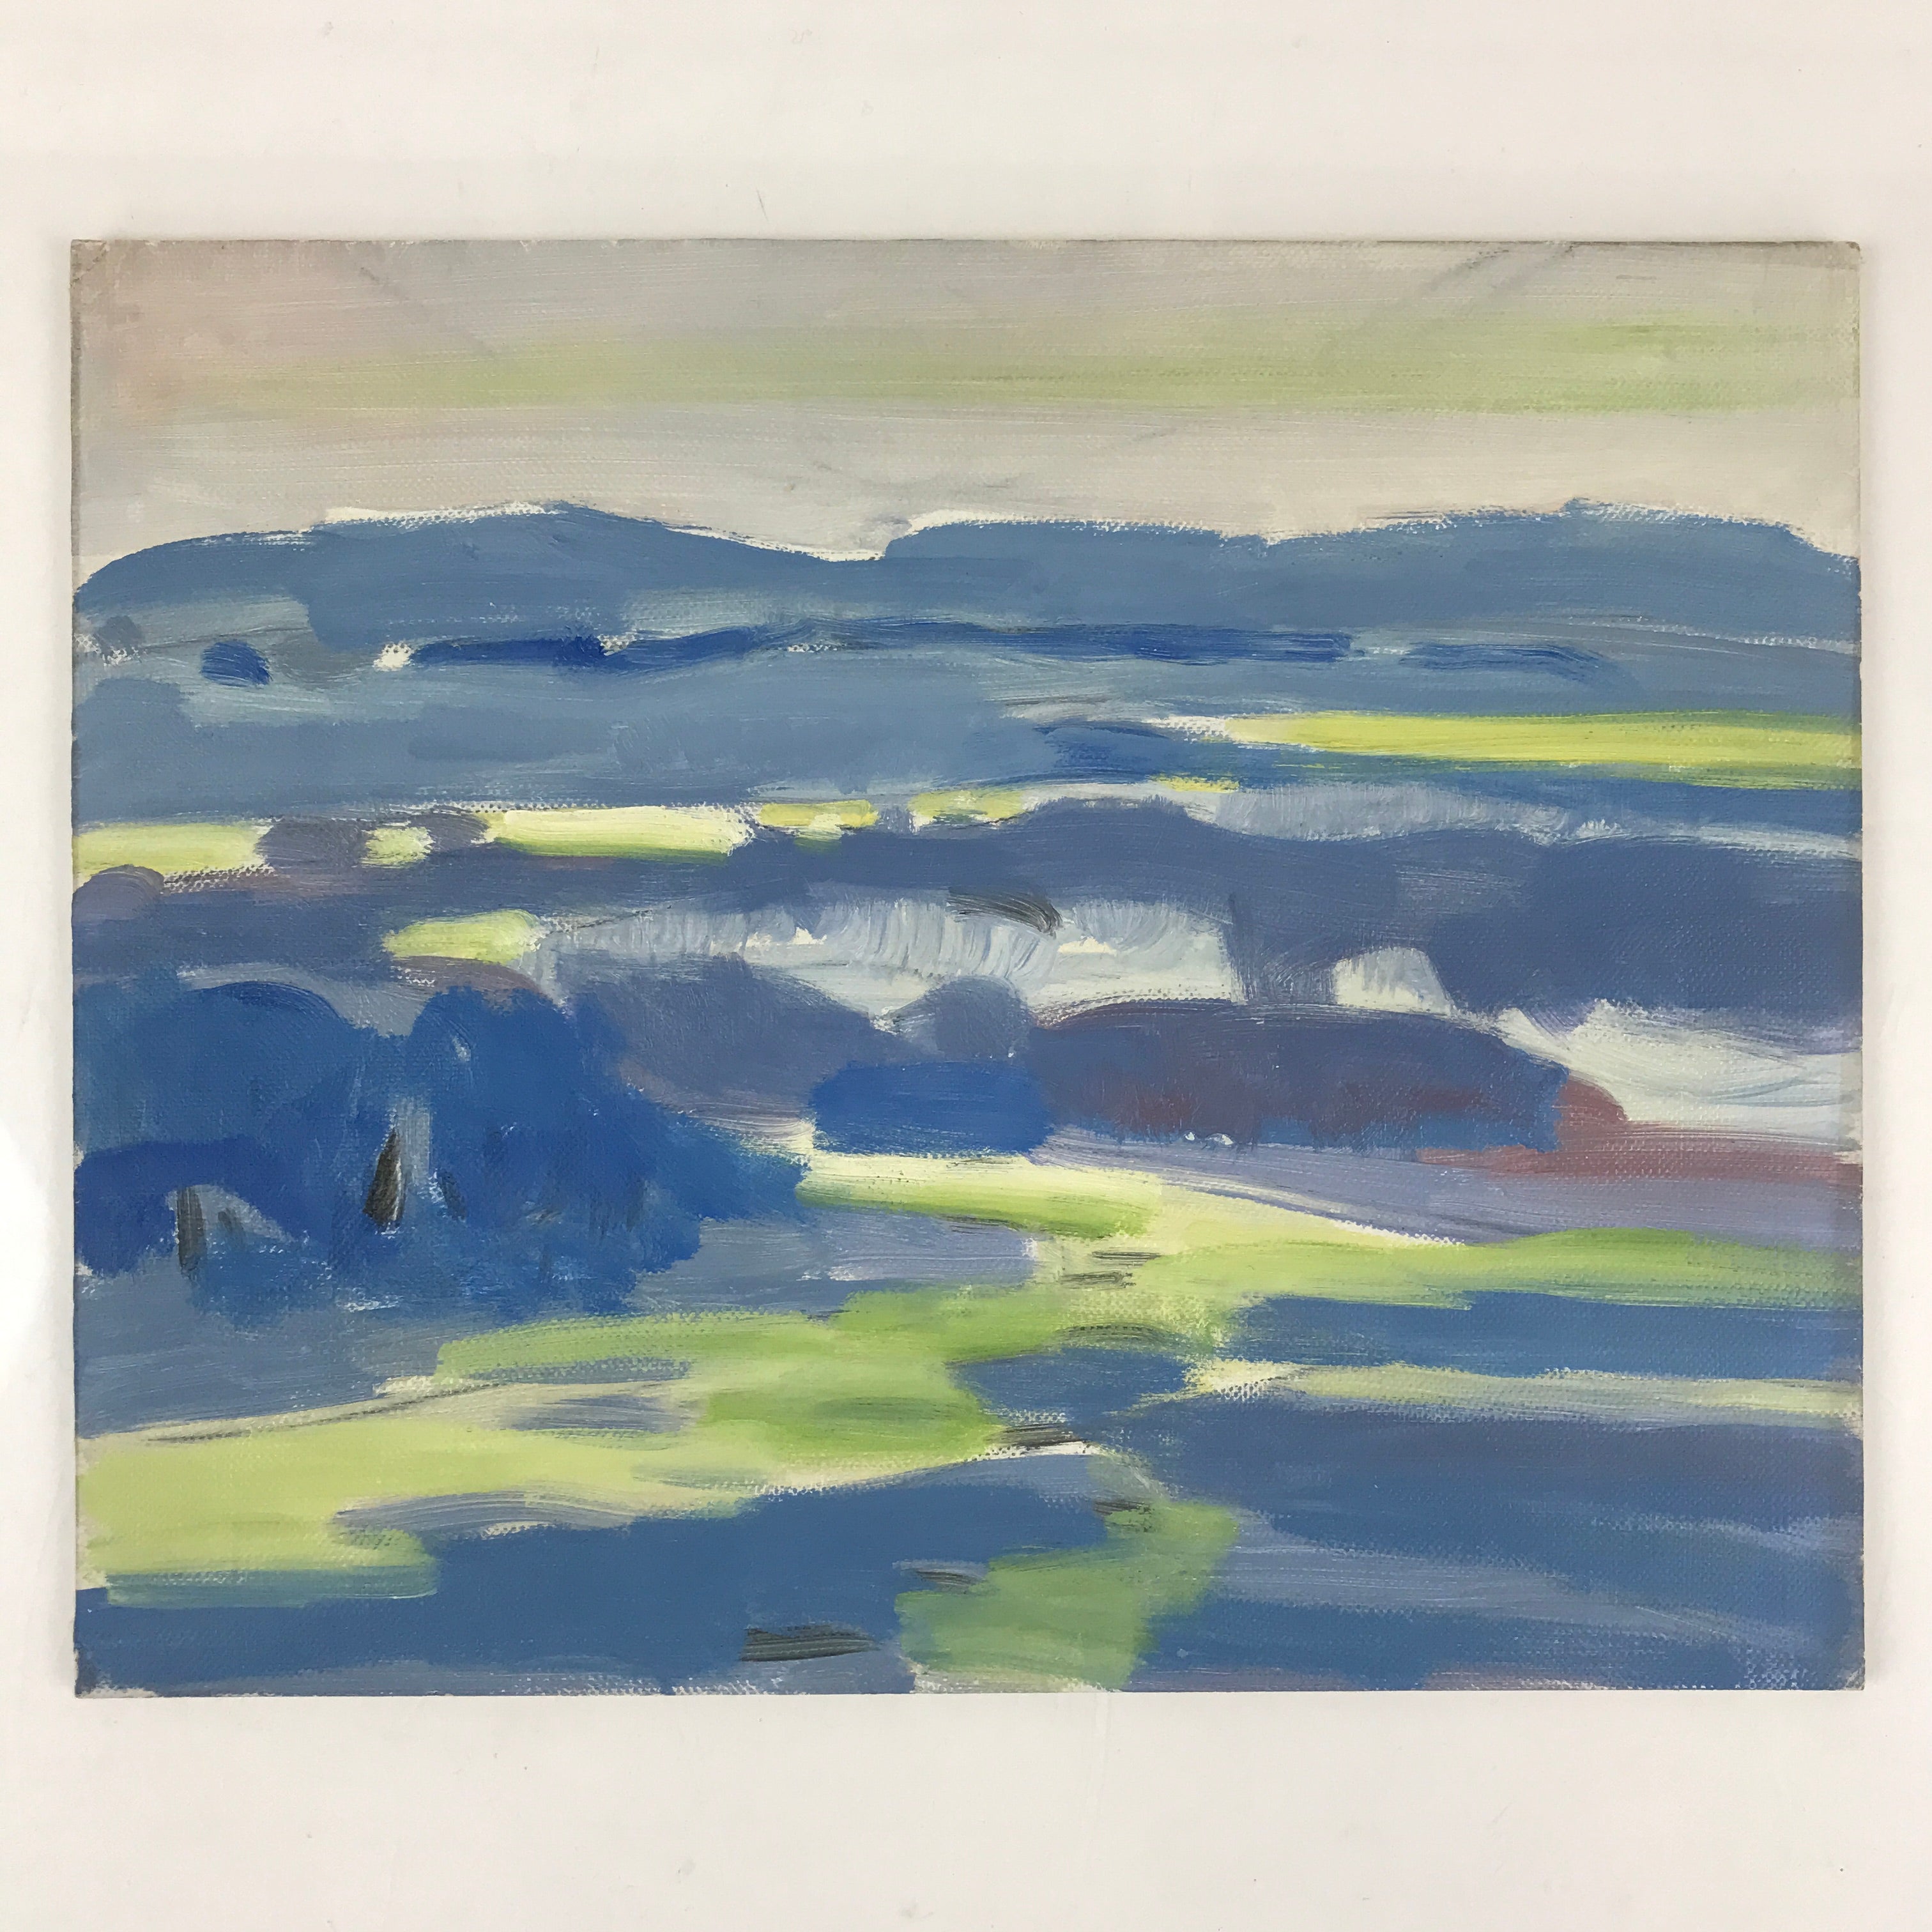 Japanese Overcast Valley Oil Painting Landscape Original Art Unsigned FL159